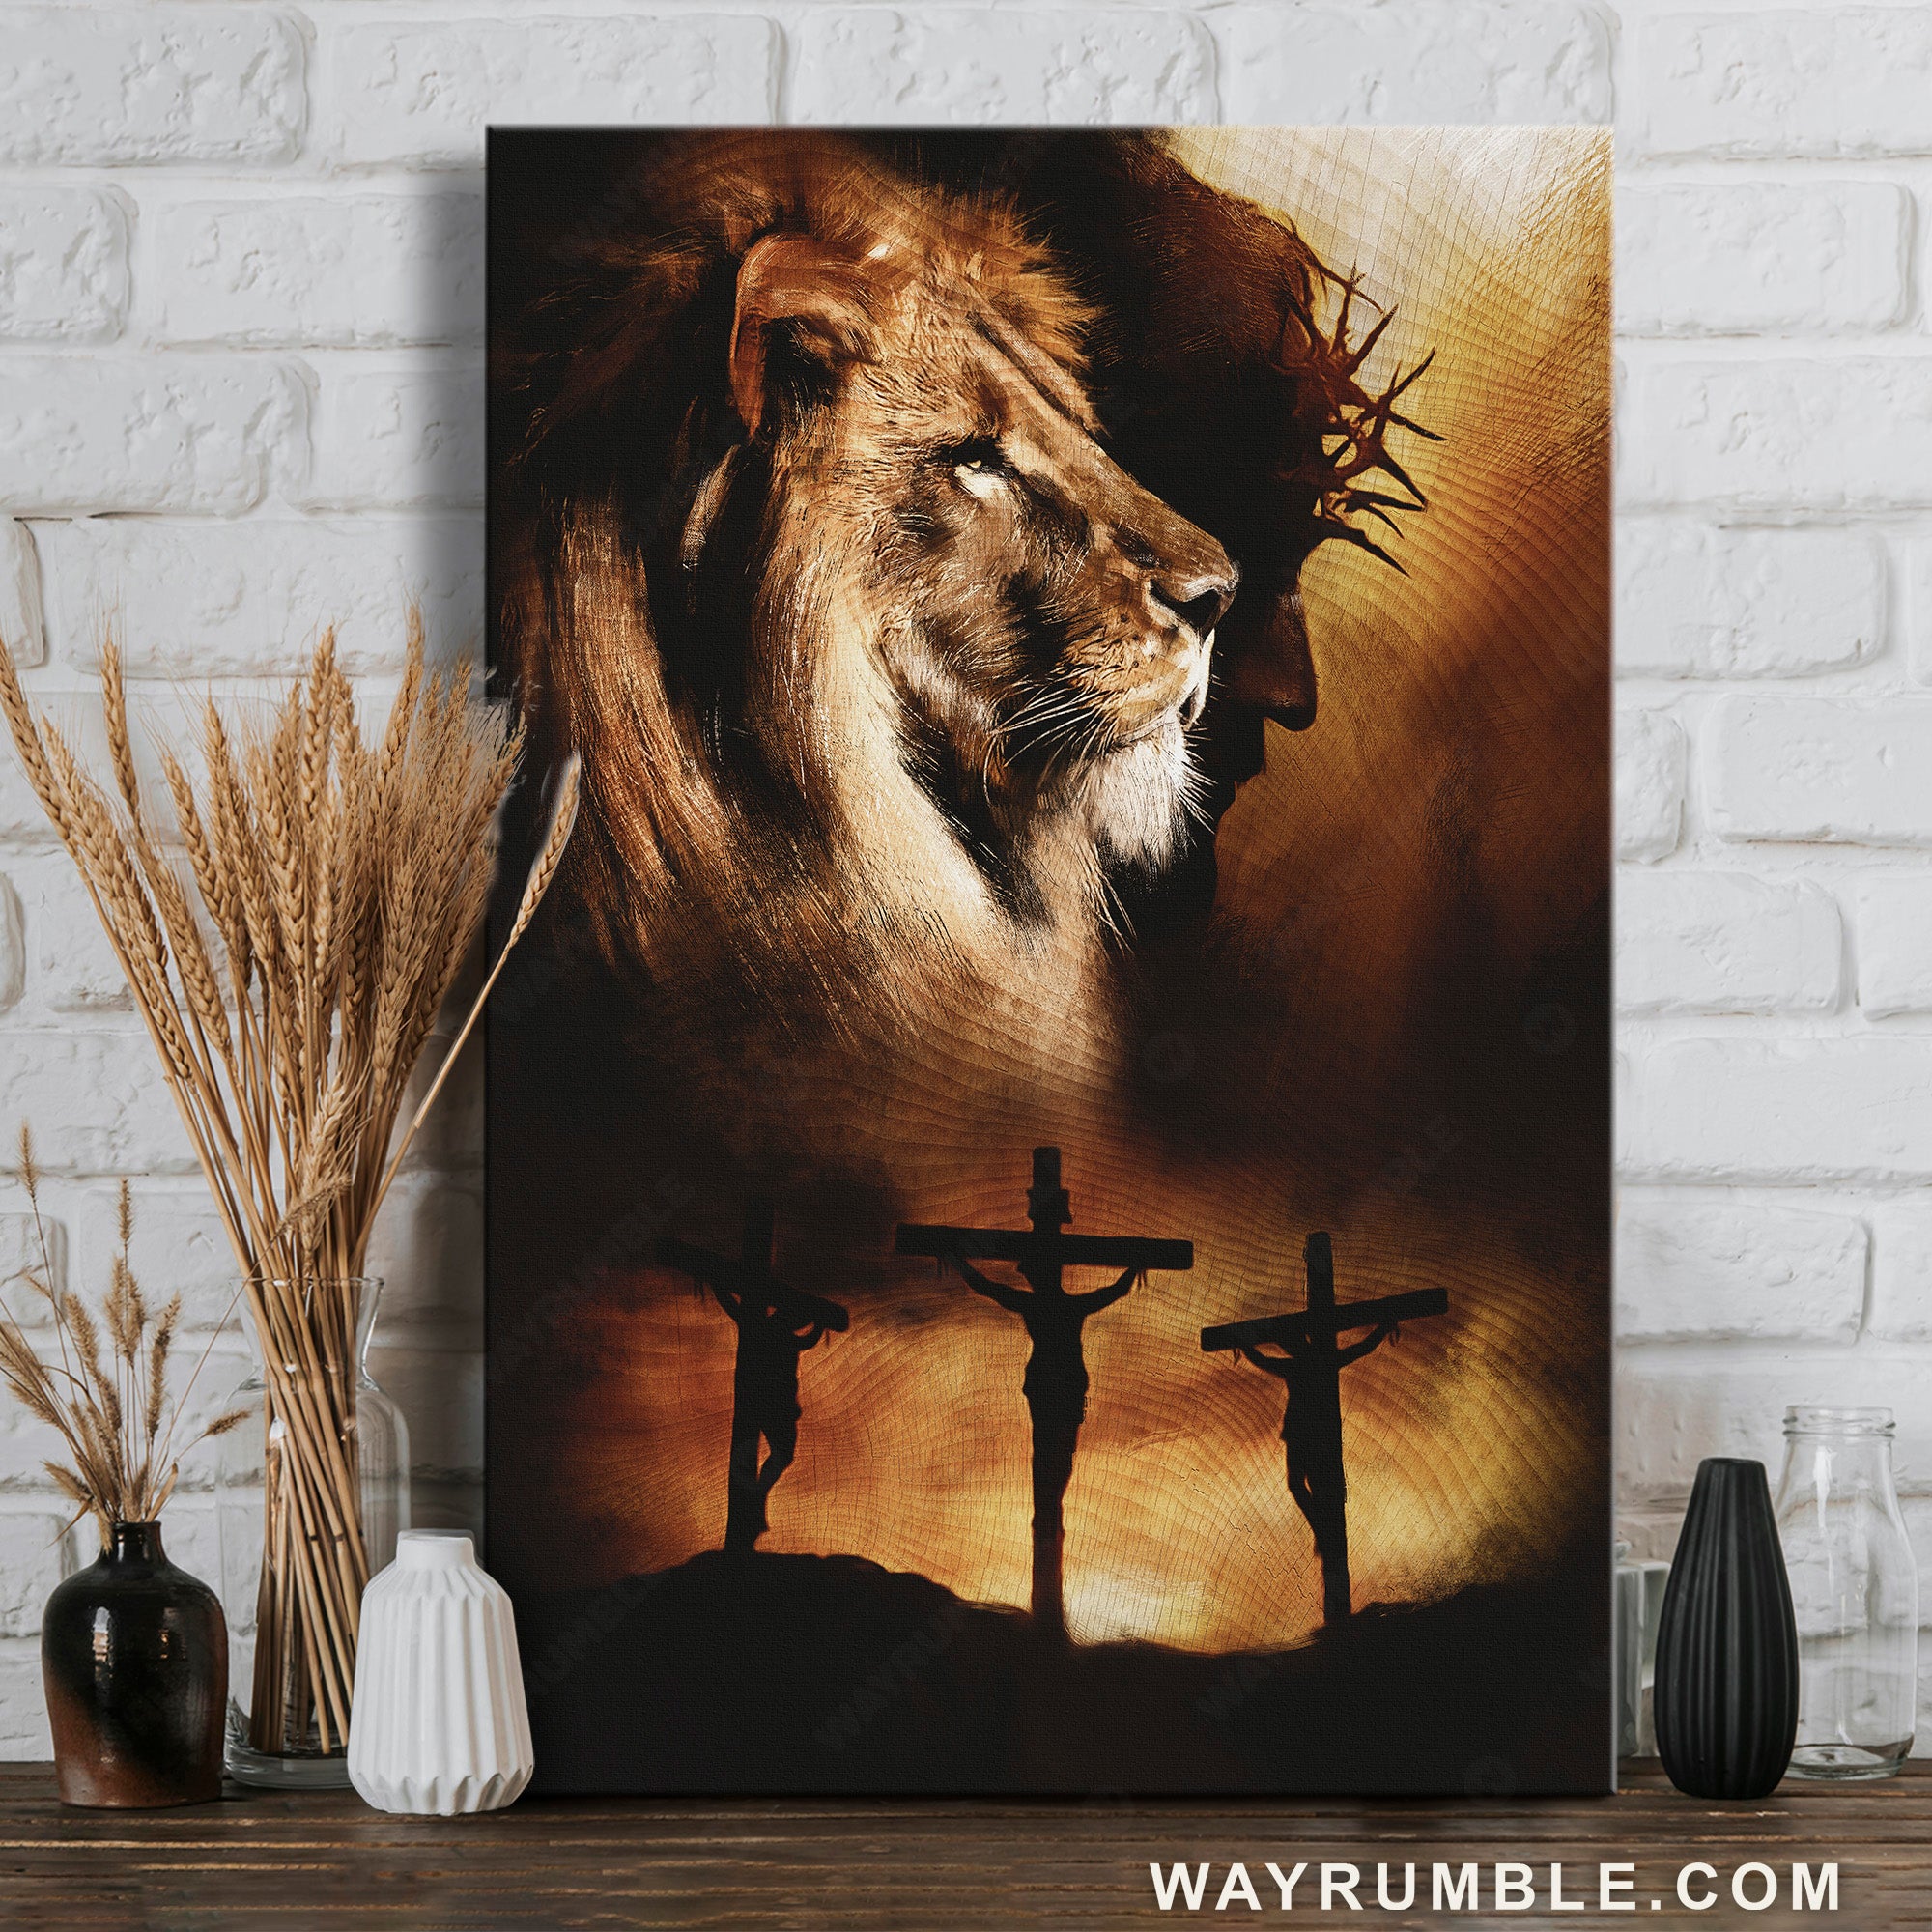 Jesus Christ, Jesus on the cross, The Lion of Judah, Jesus is King - Jesus Portrait Canvas Prints, Christian Wall Art